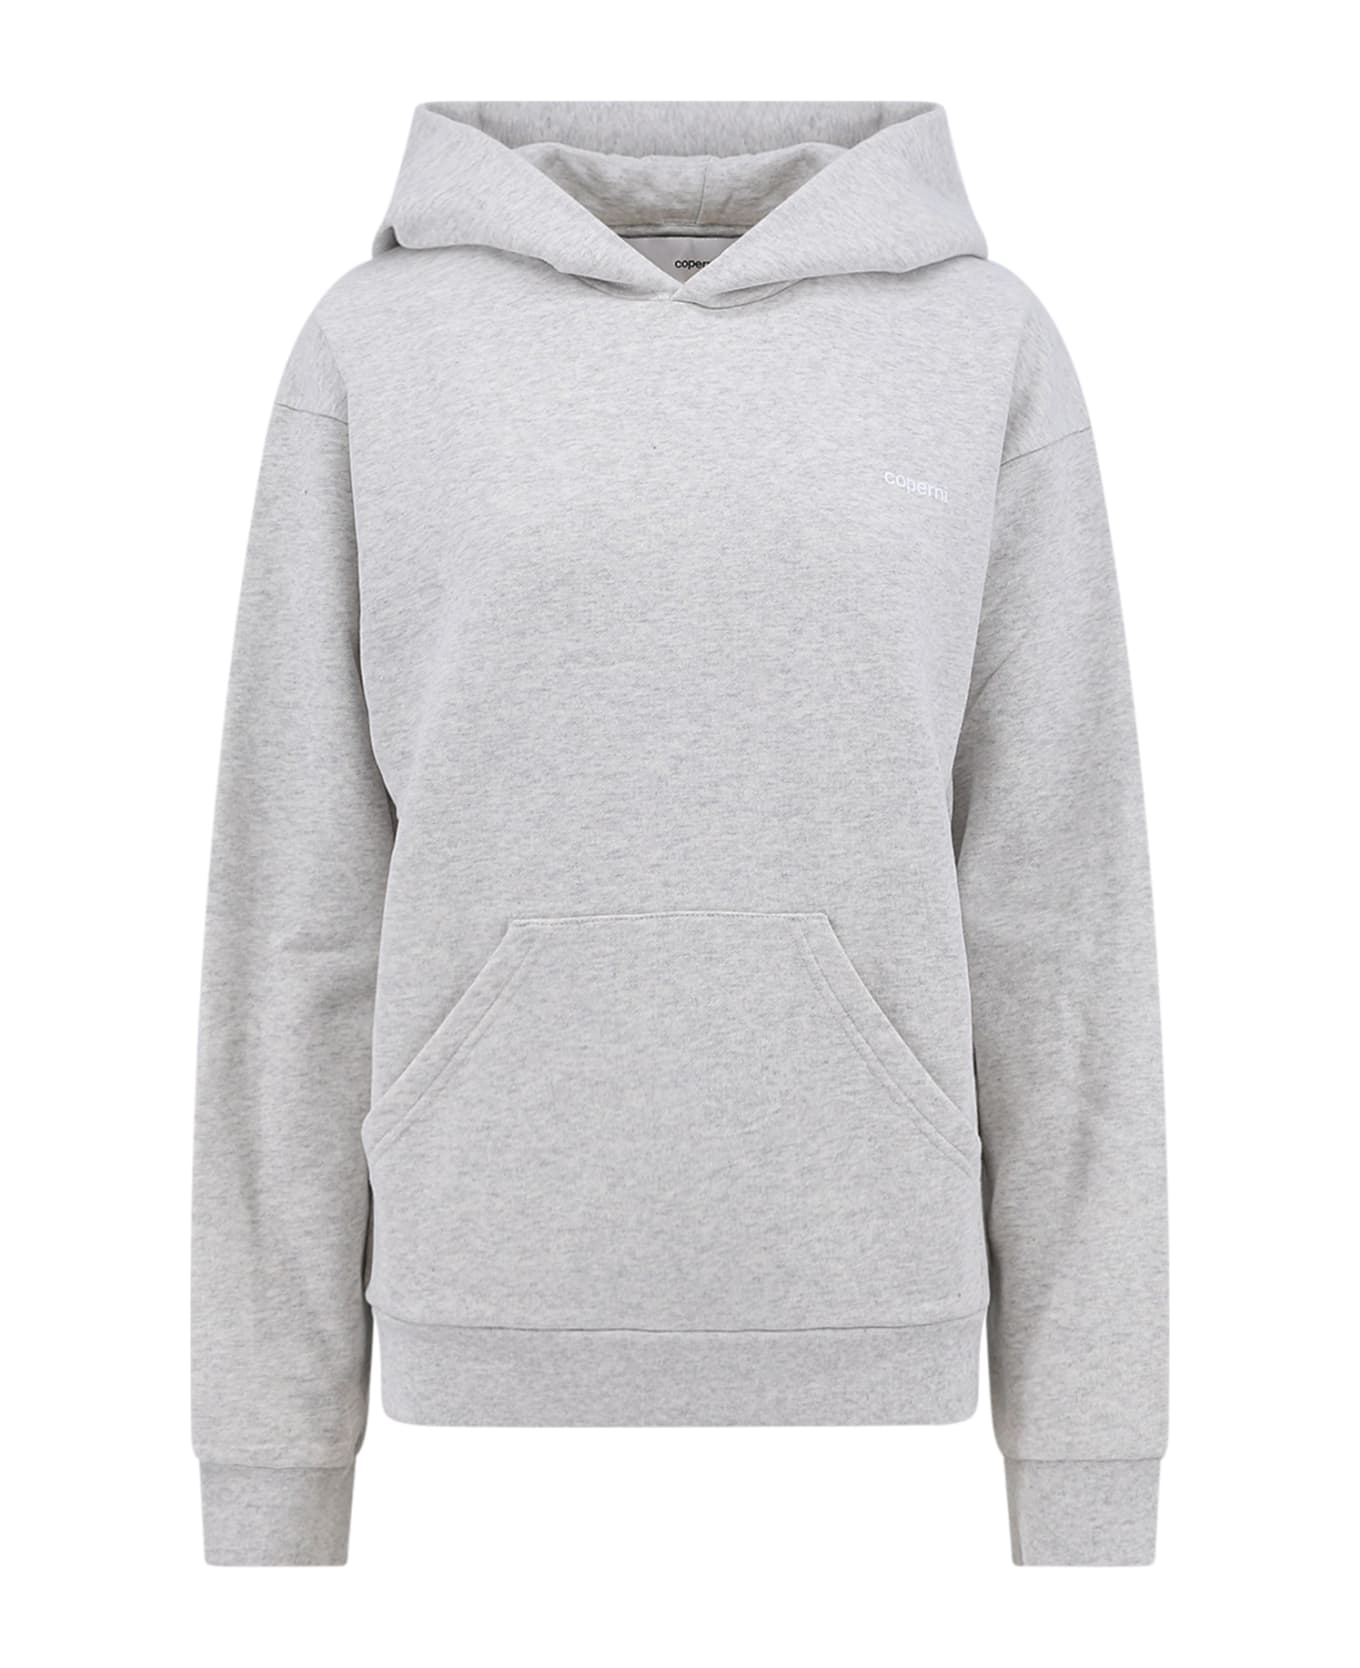 Coperni Sweatshirt - Grey フリース